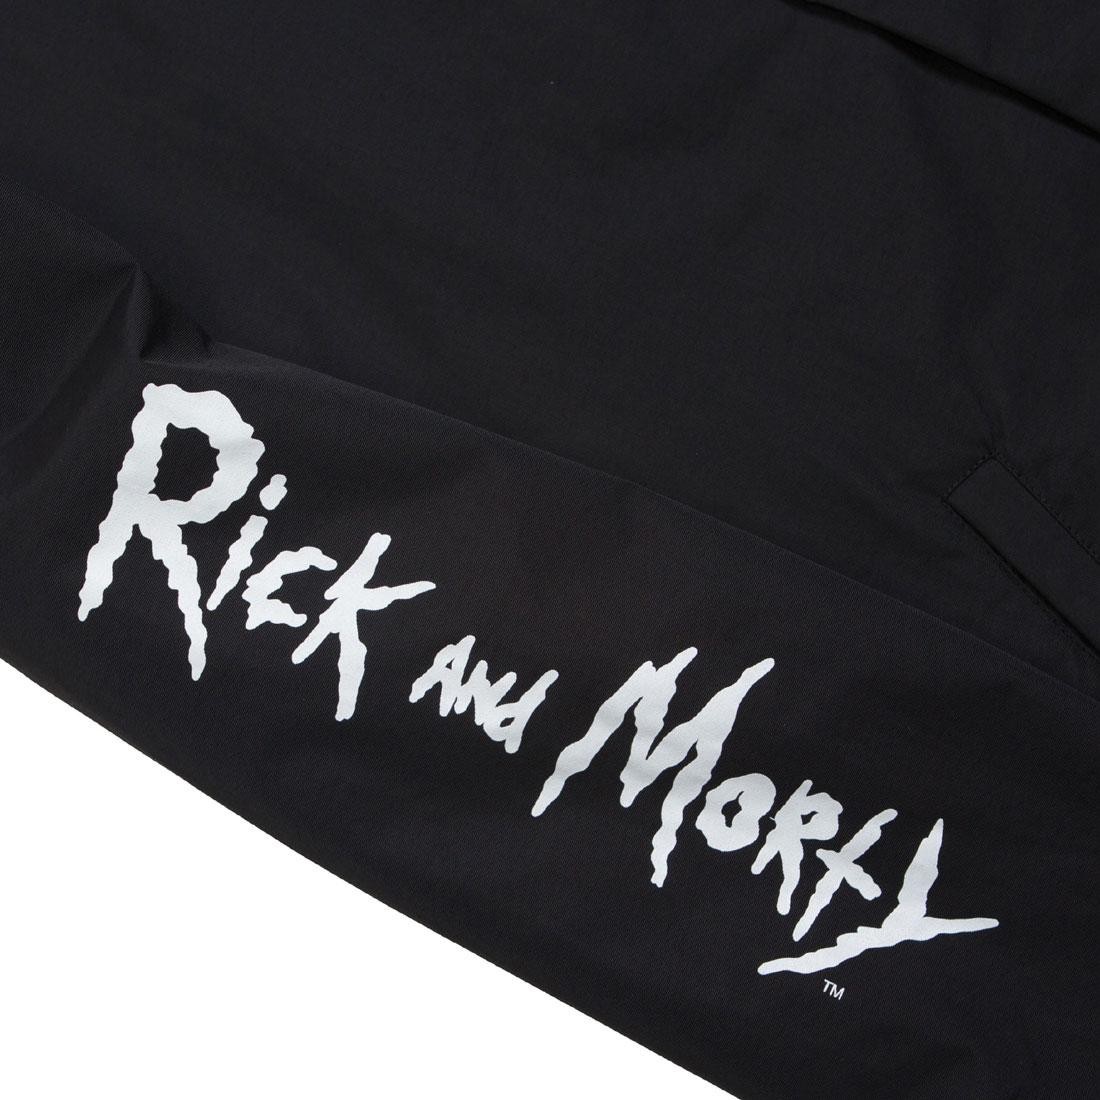 BAIT x Rick and Morty Men Skateboard Coaches Jacket black